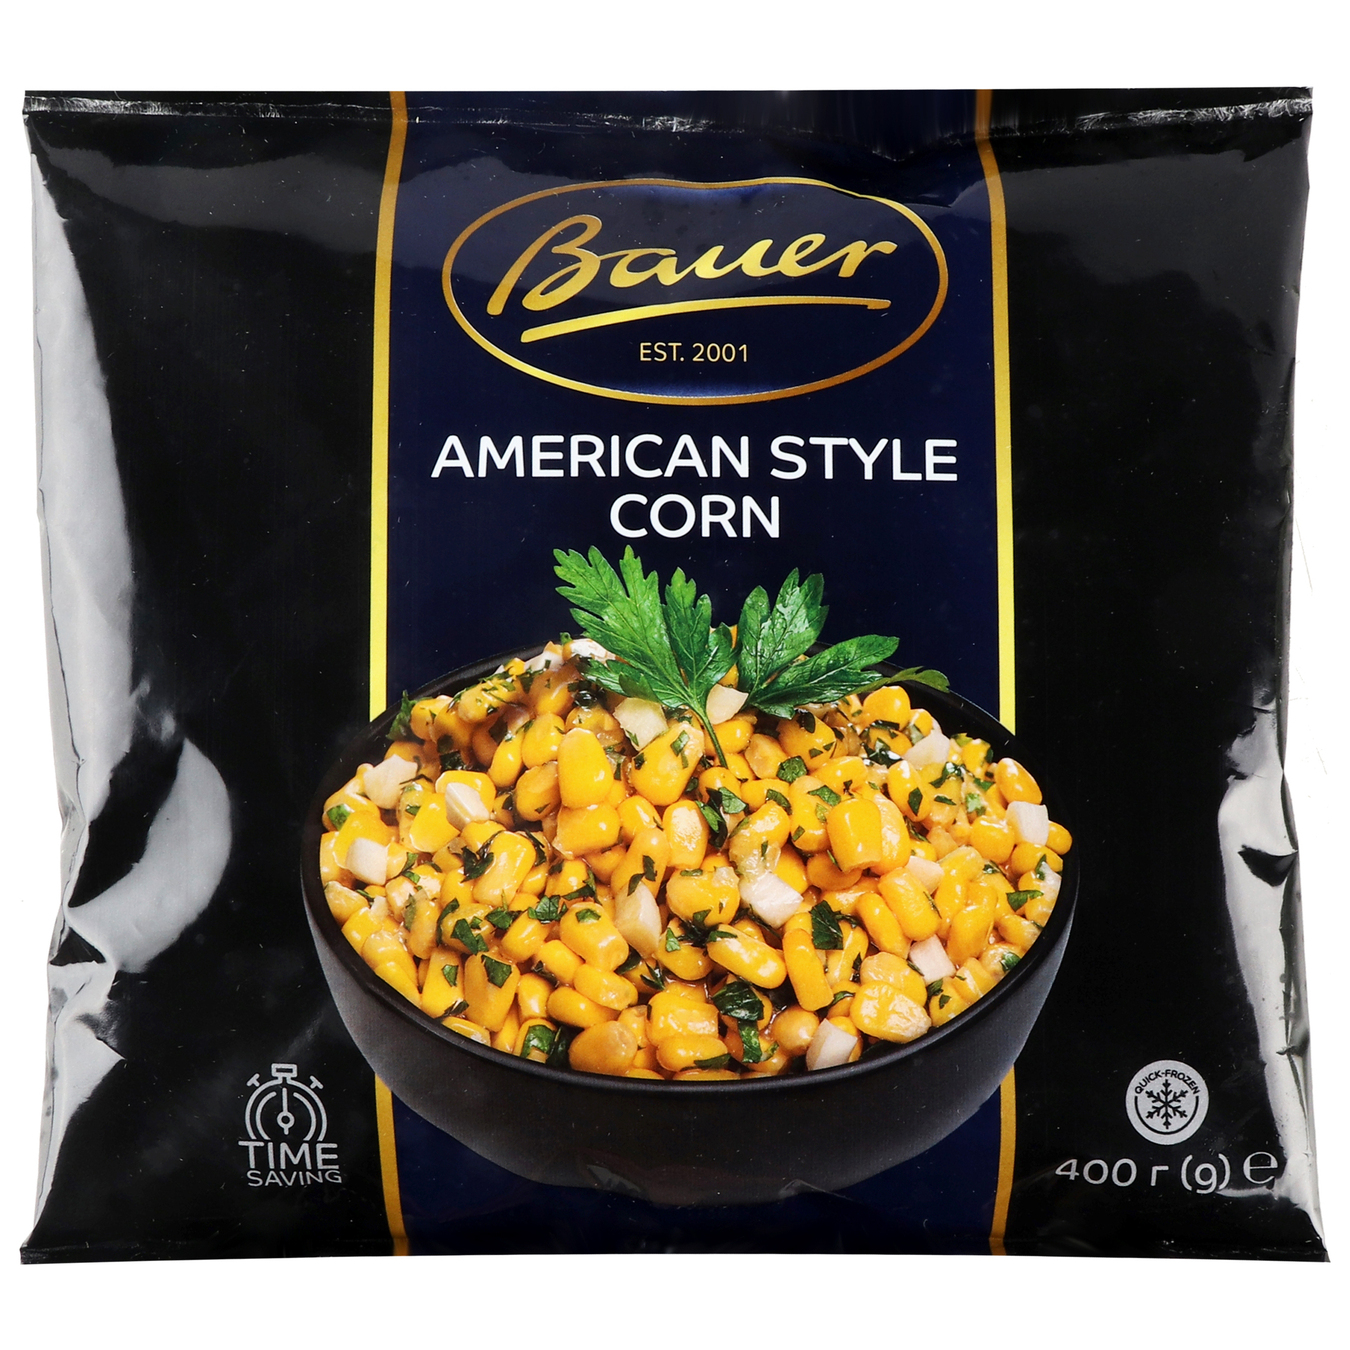 Bauer American Style Corn vegetable quick-frozen mixture 400g